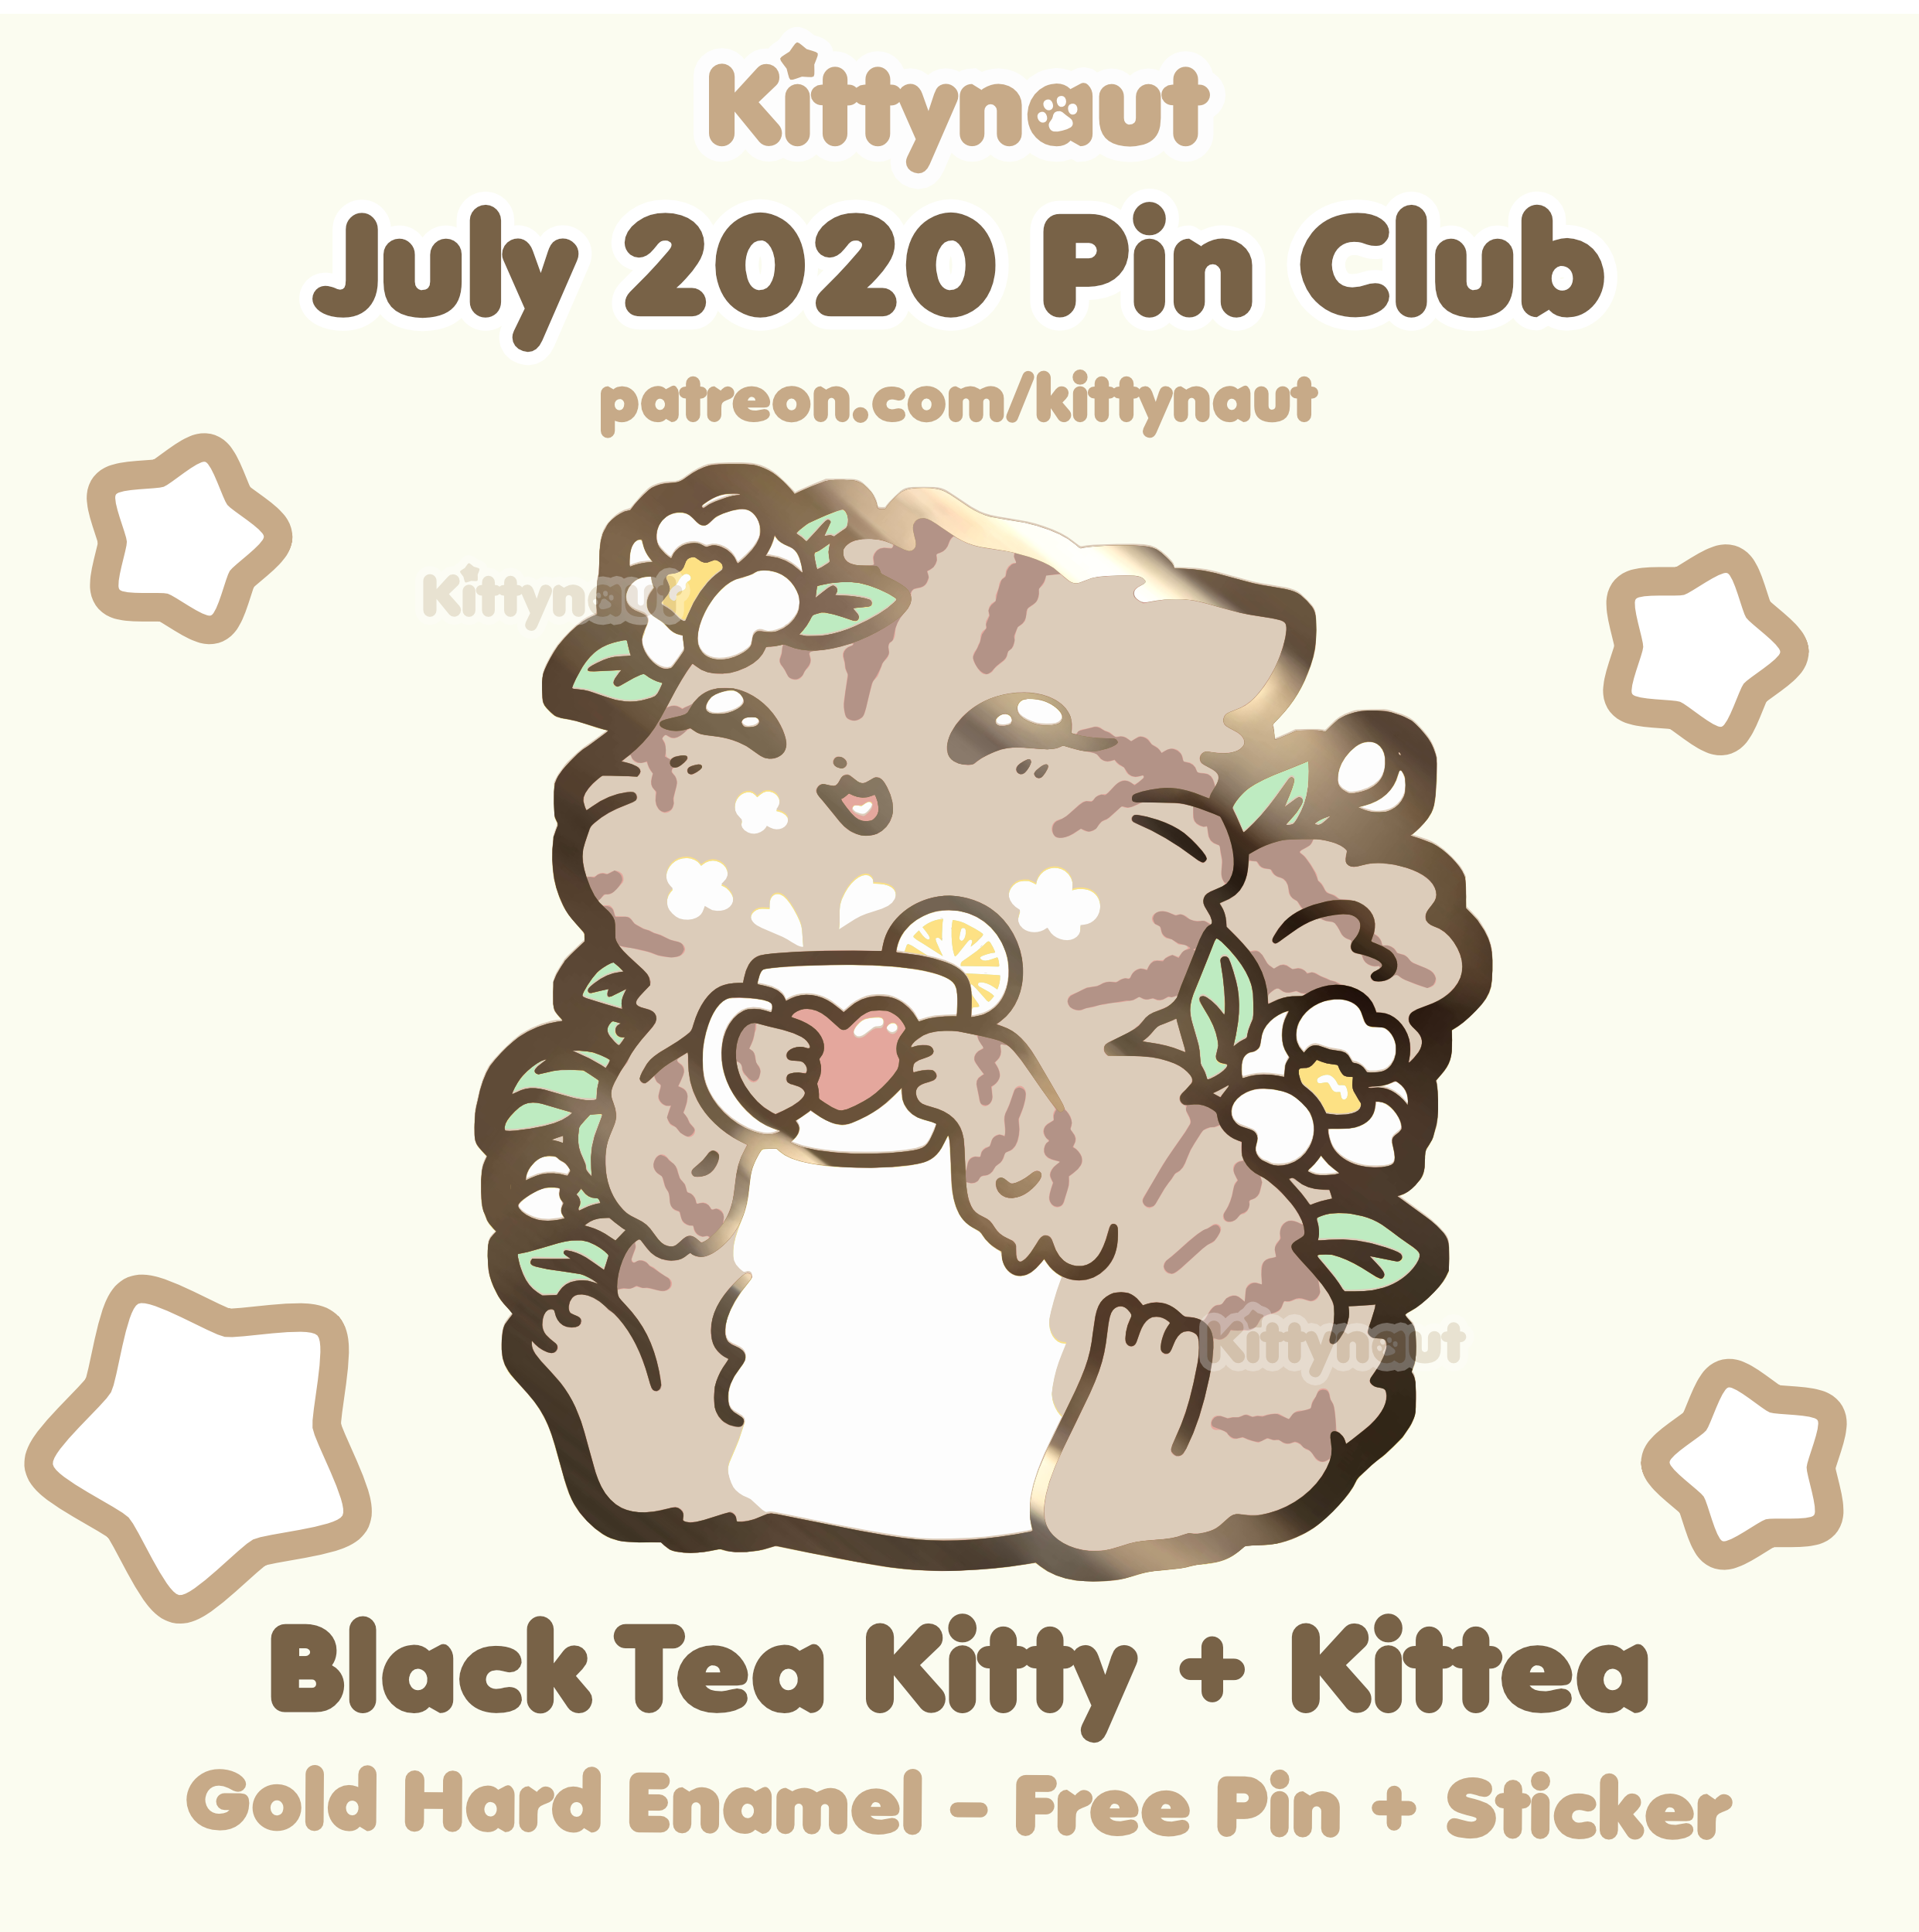 Secret Shop - July 2020 - Black Tea Kitty - Kittynaut